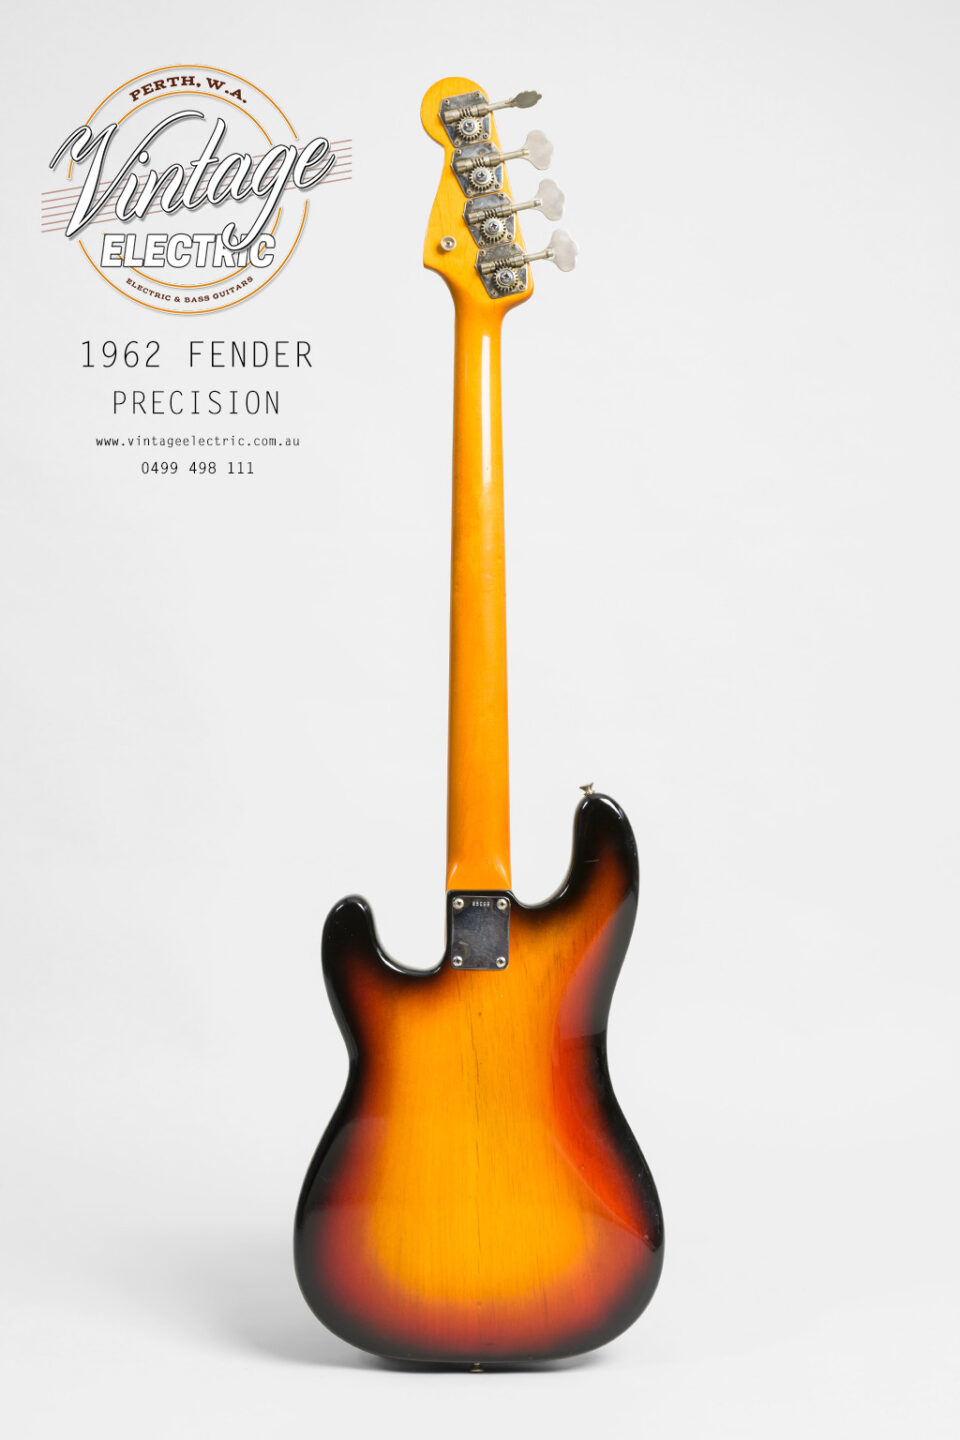 1962 Fender Precision Back of Bass